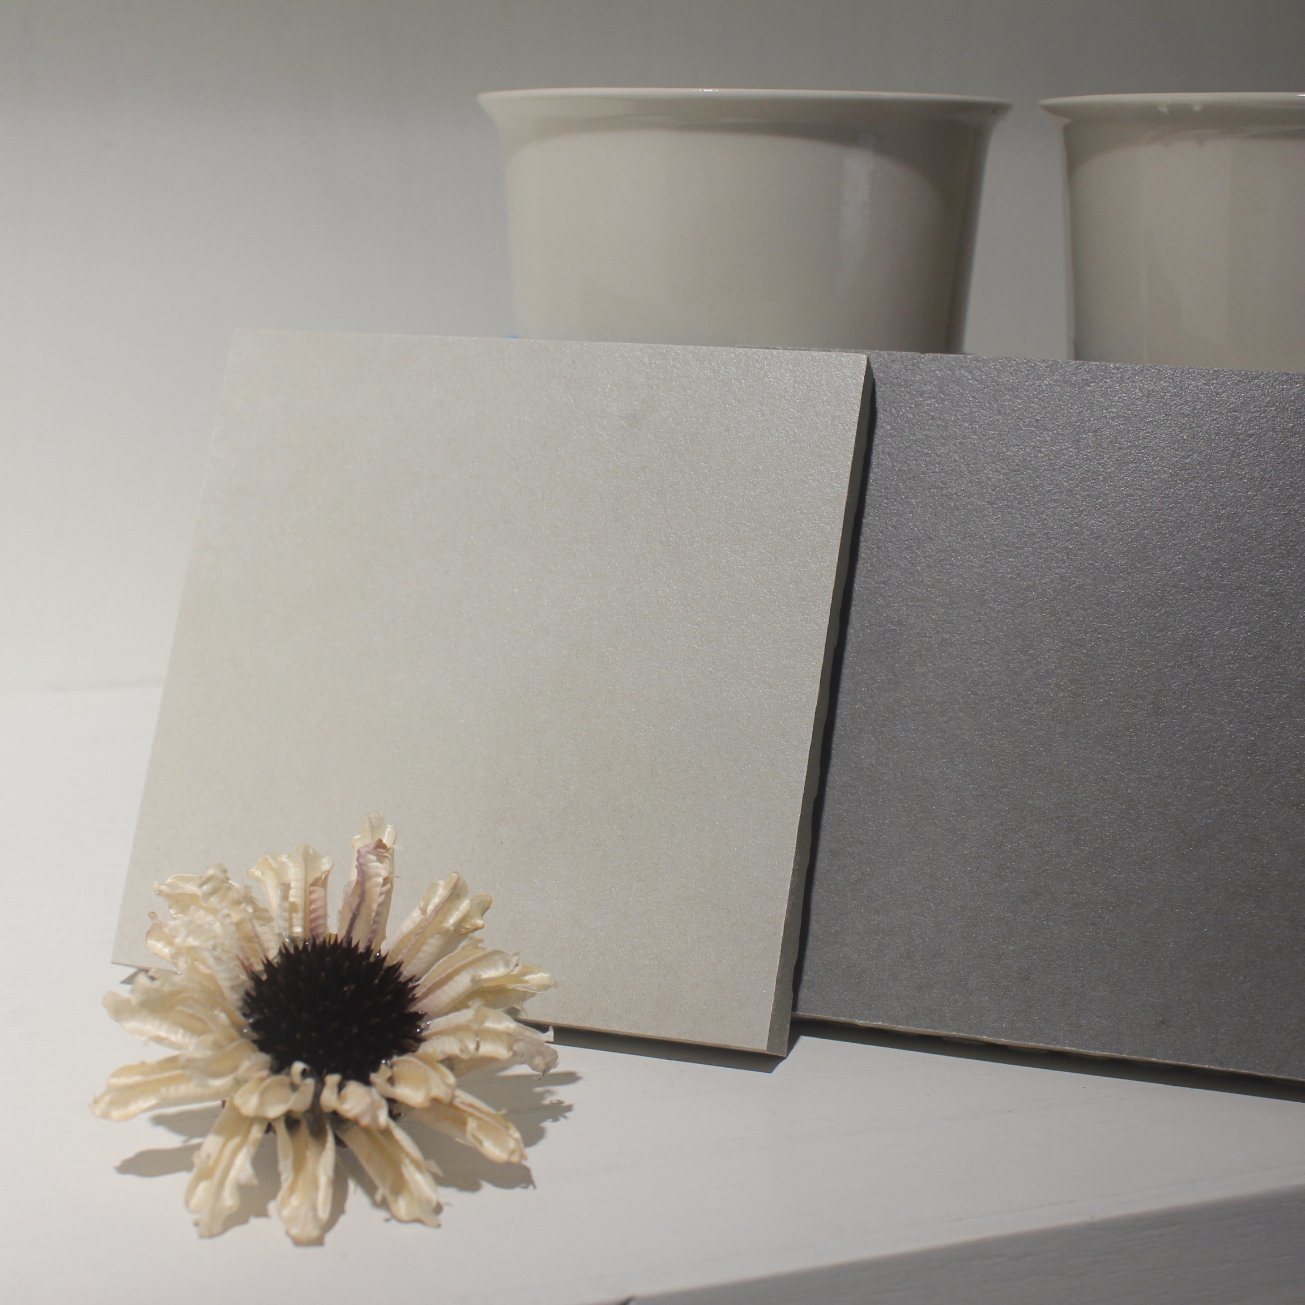 Interio Ceramic Tile Building Materials Porcelain Tile (AVE603)